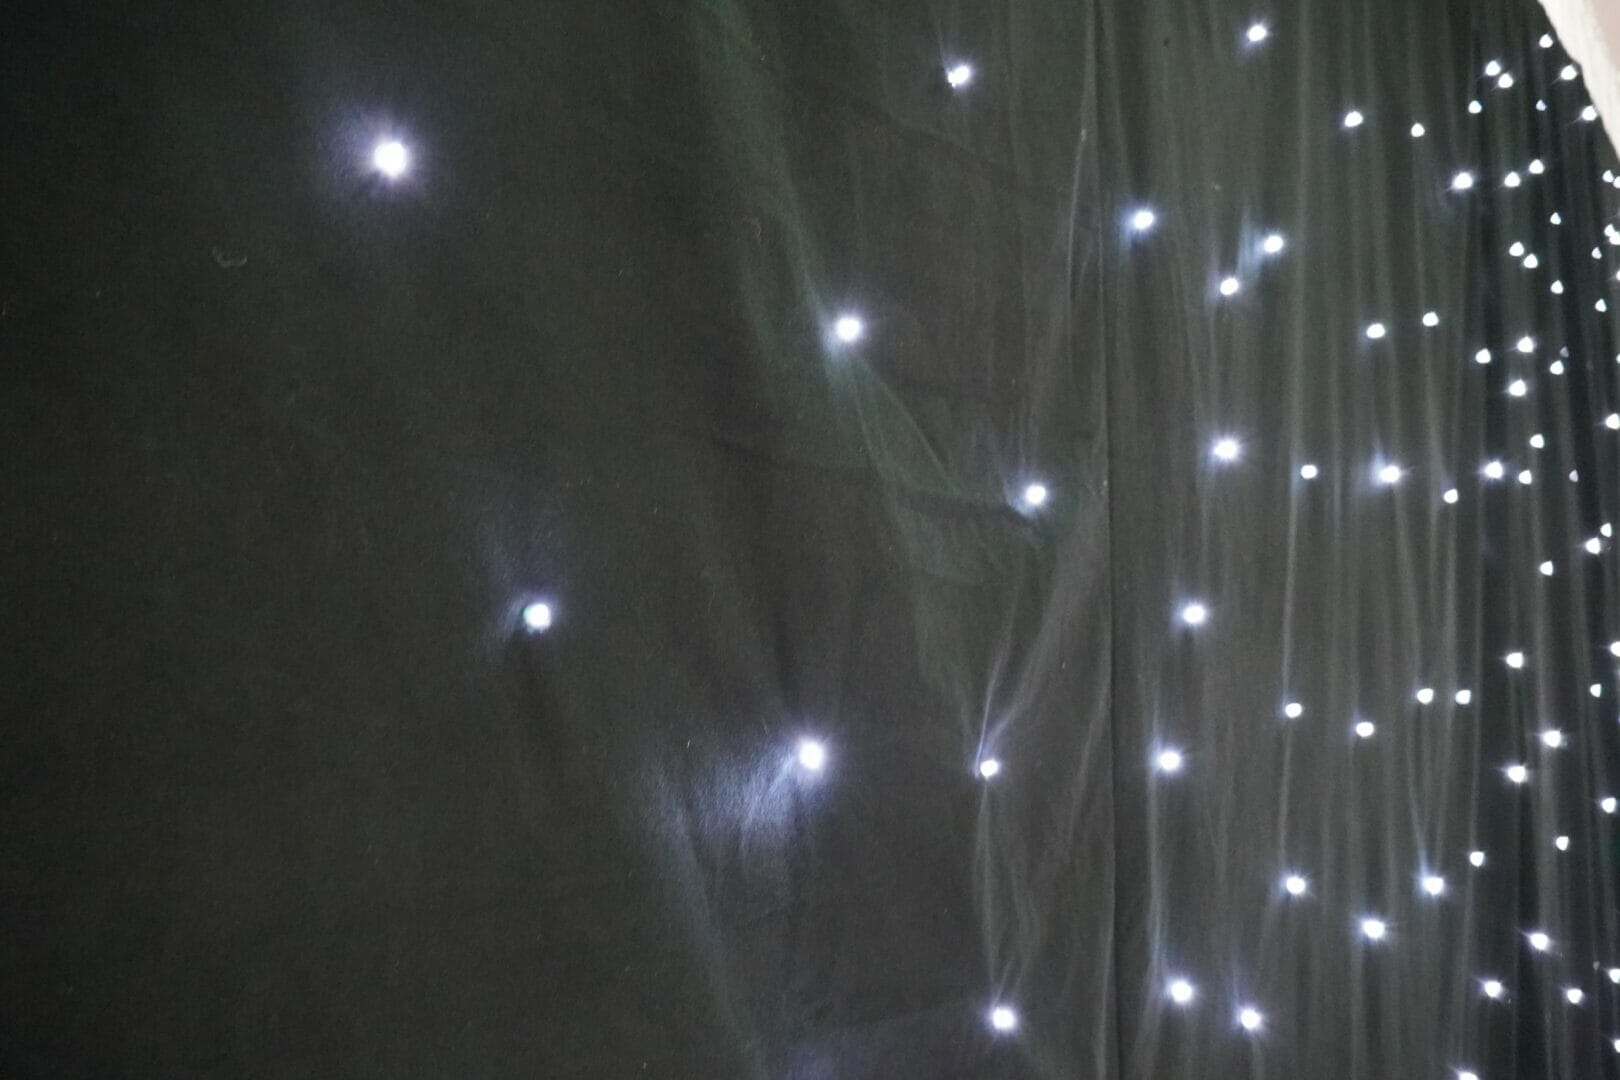 Black star cloth with led lights